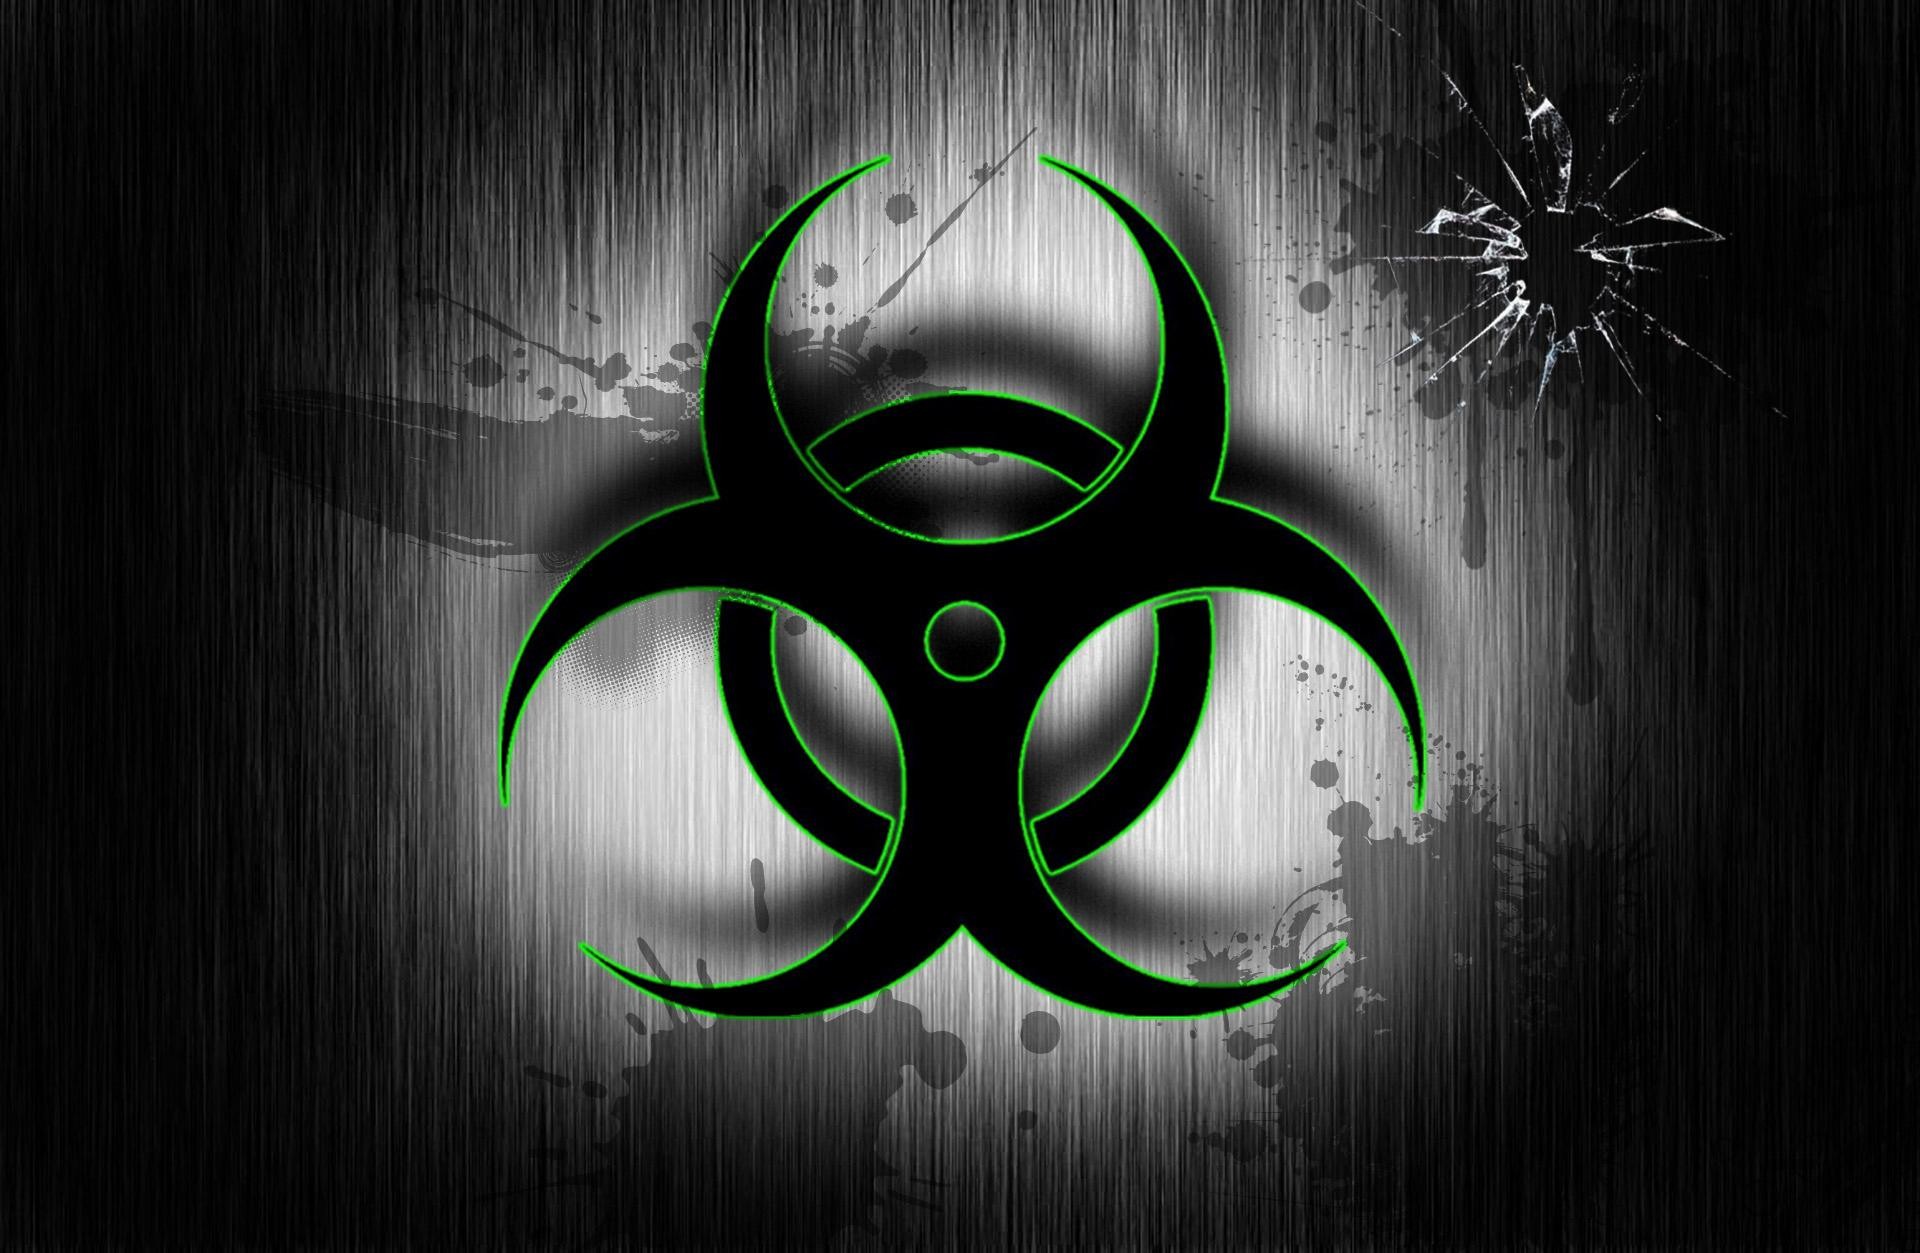 1920x1253 wallpaper.wiki-Free-Biohazard-Symbol-Background-Download-PIC-